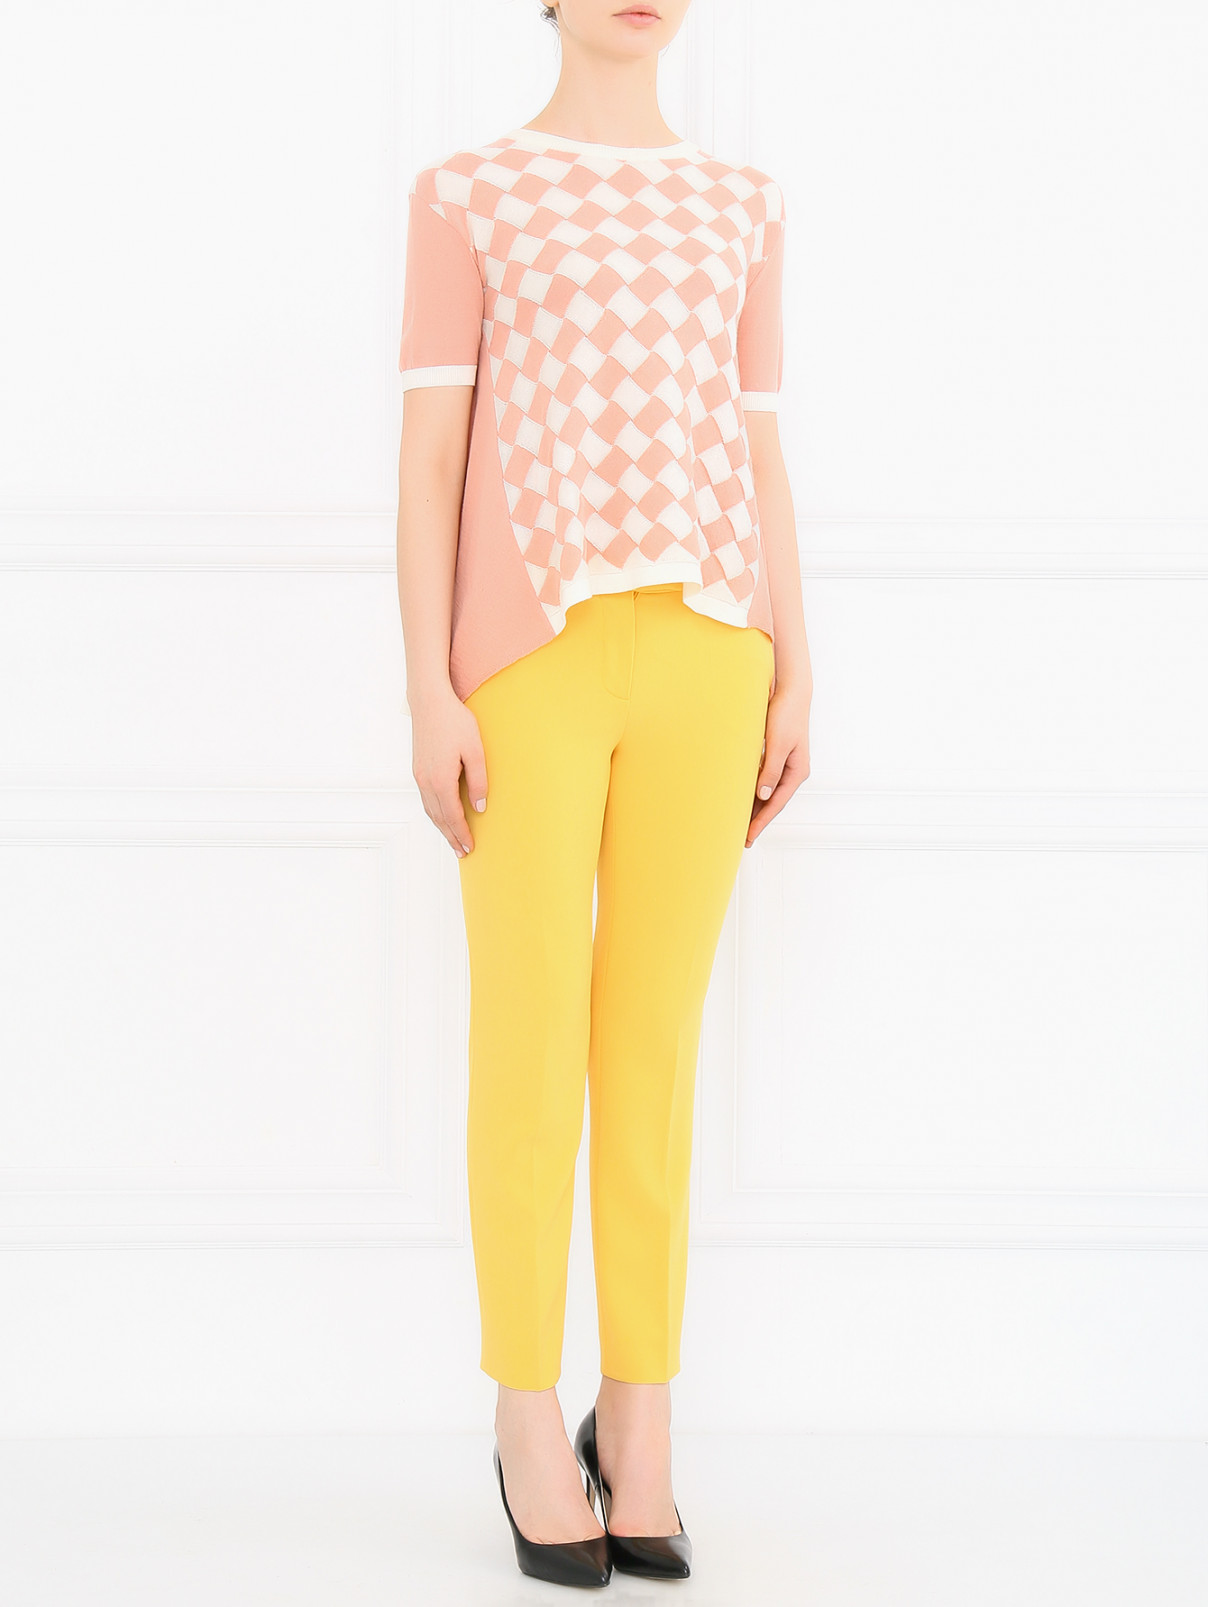 Укороченные брюки Moschino Cheap&Chic  –  Модель Общий вид  – Цвет:  Желтый